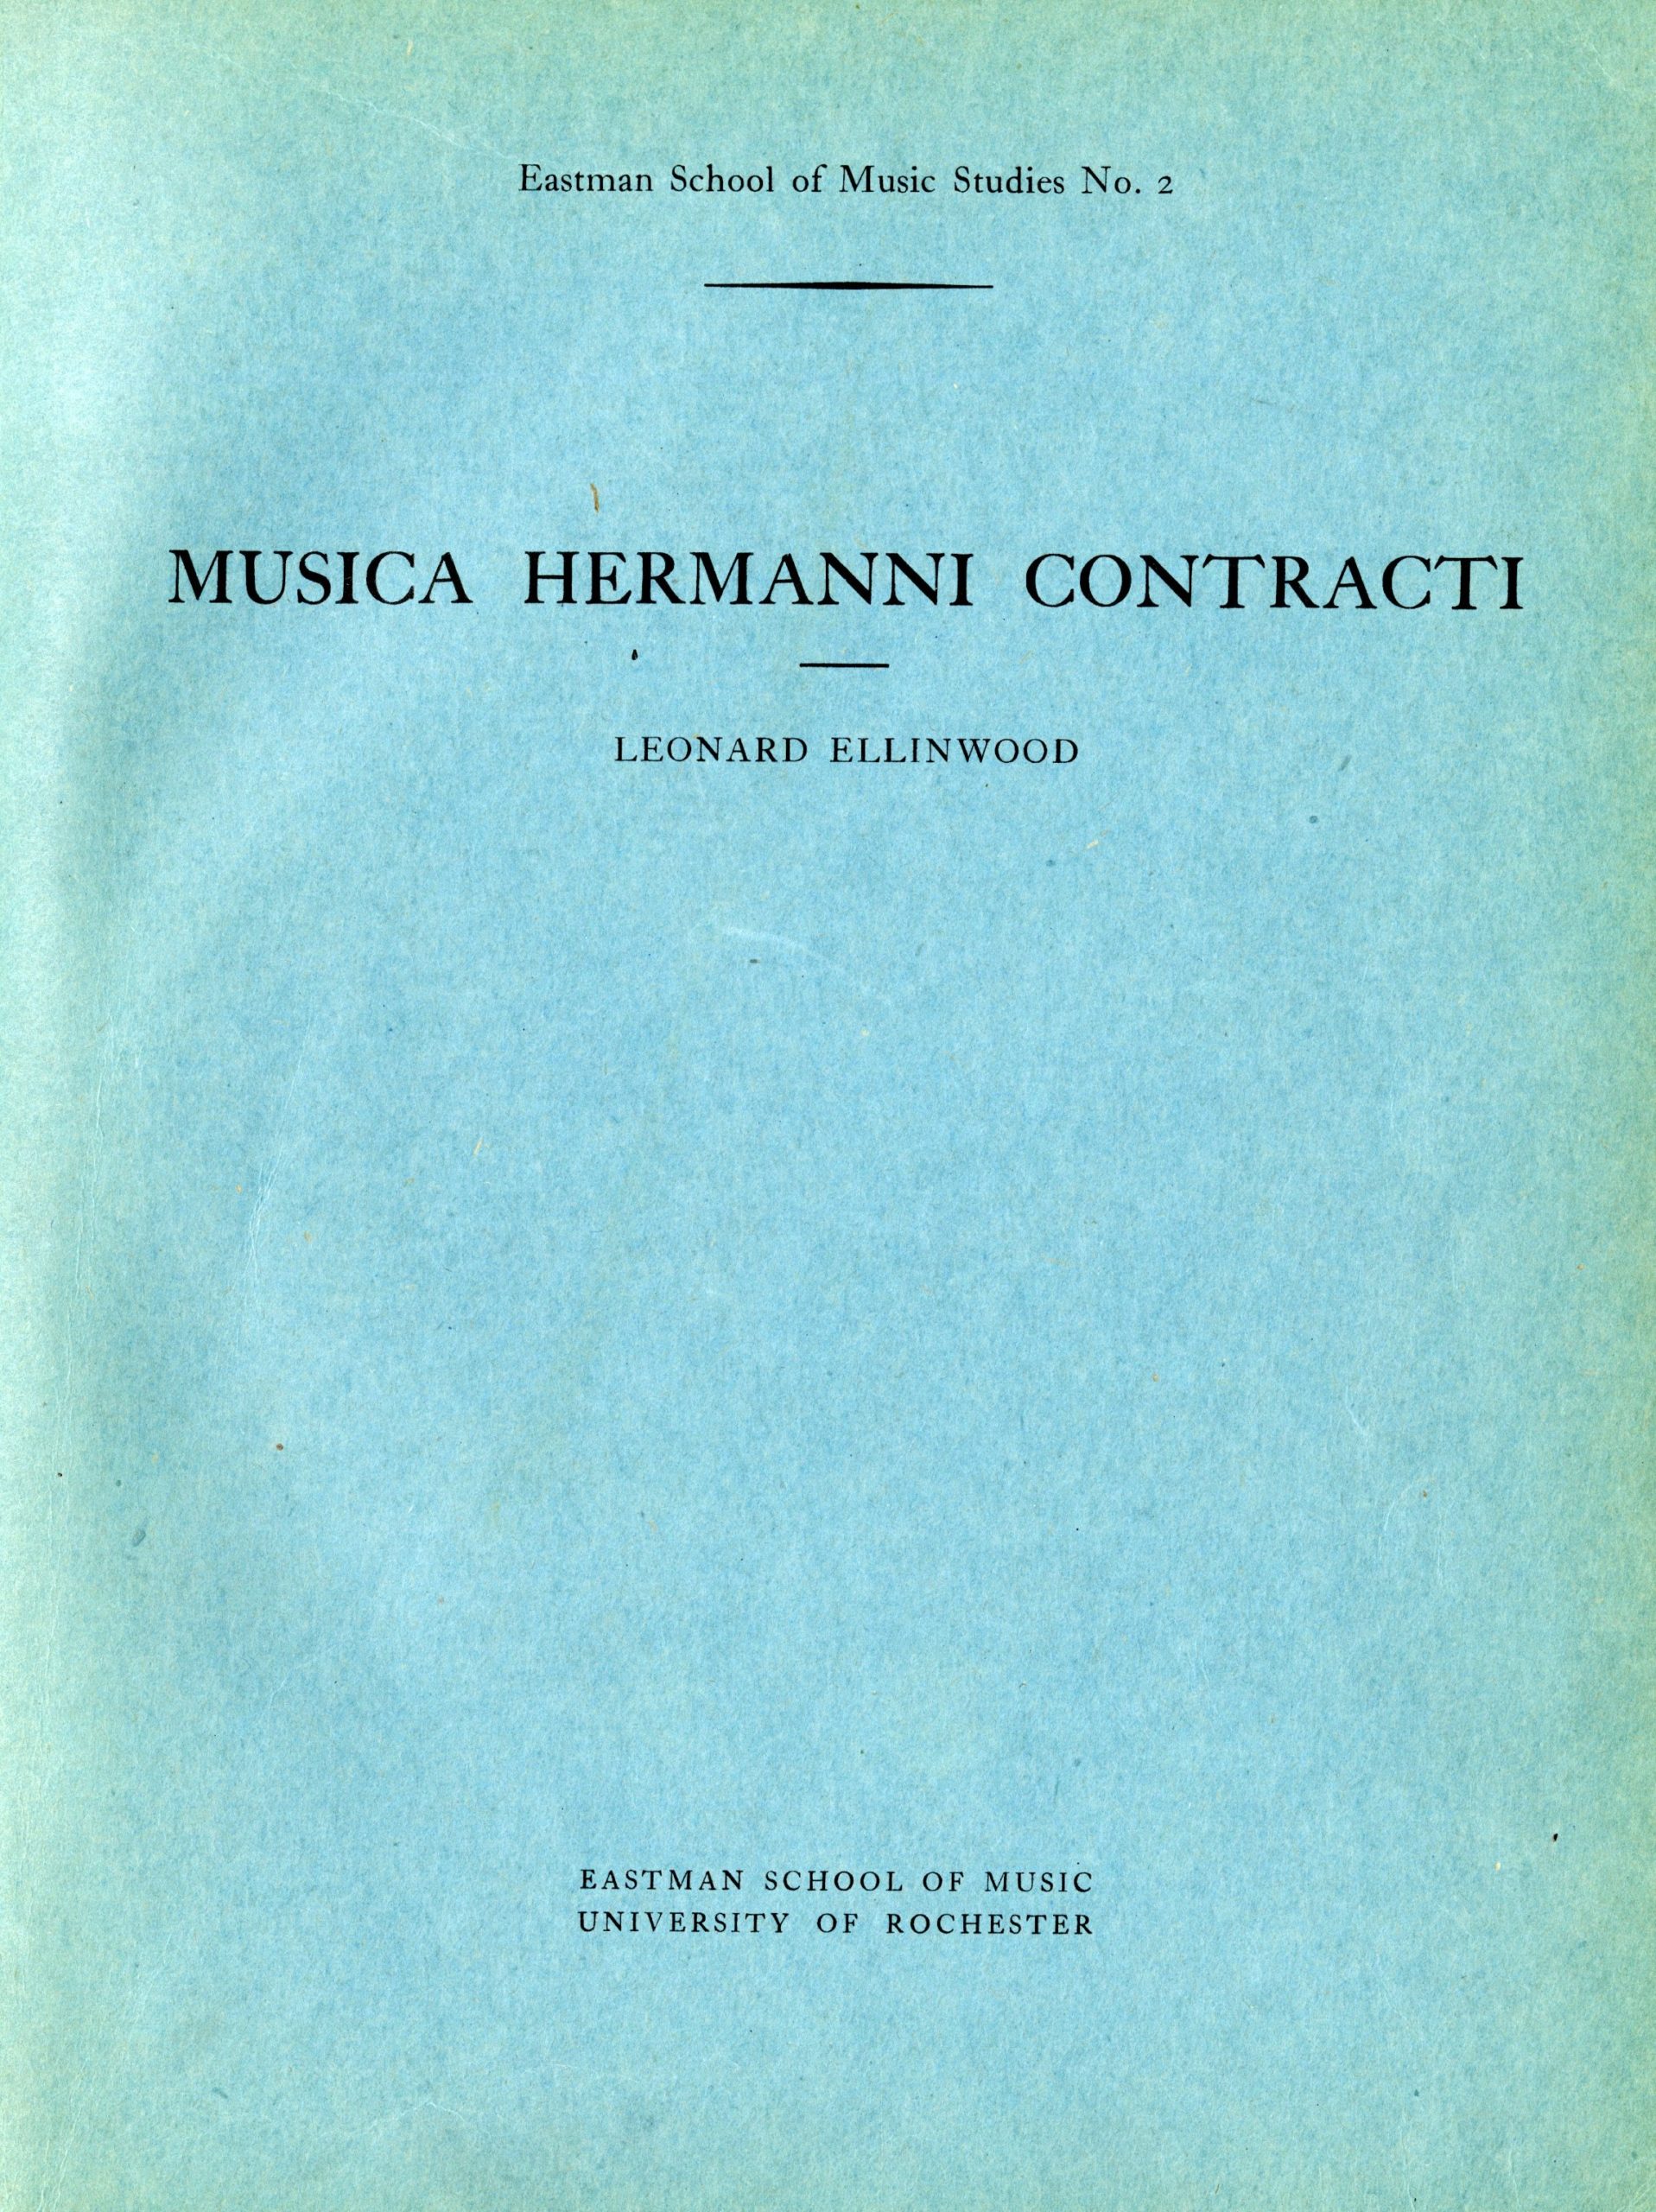 Ellinwood, Musica Hermanni Contracti, cover